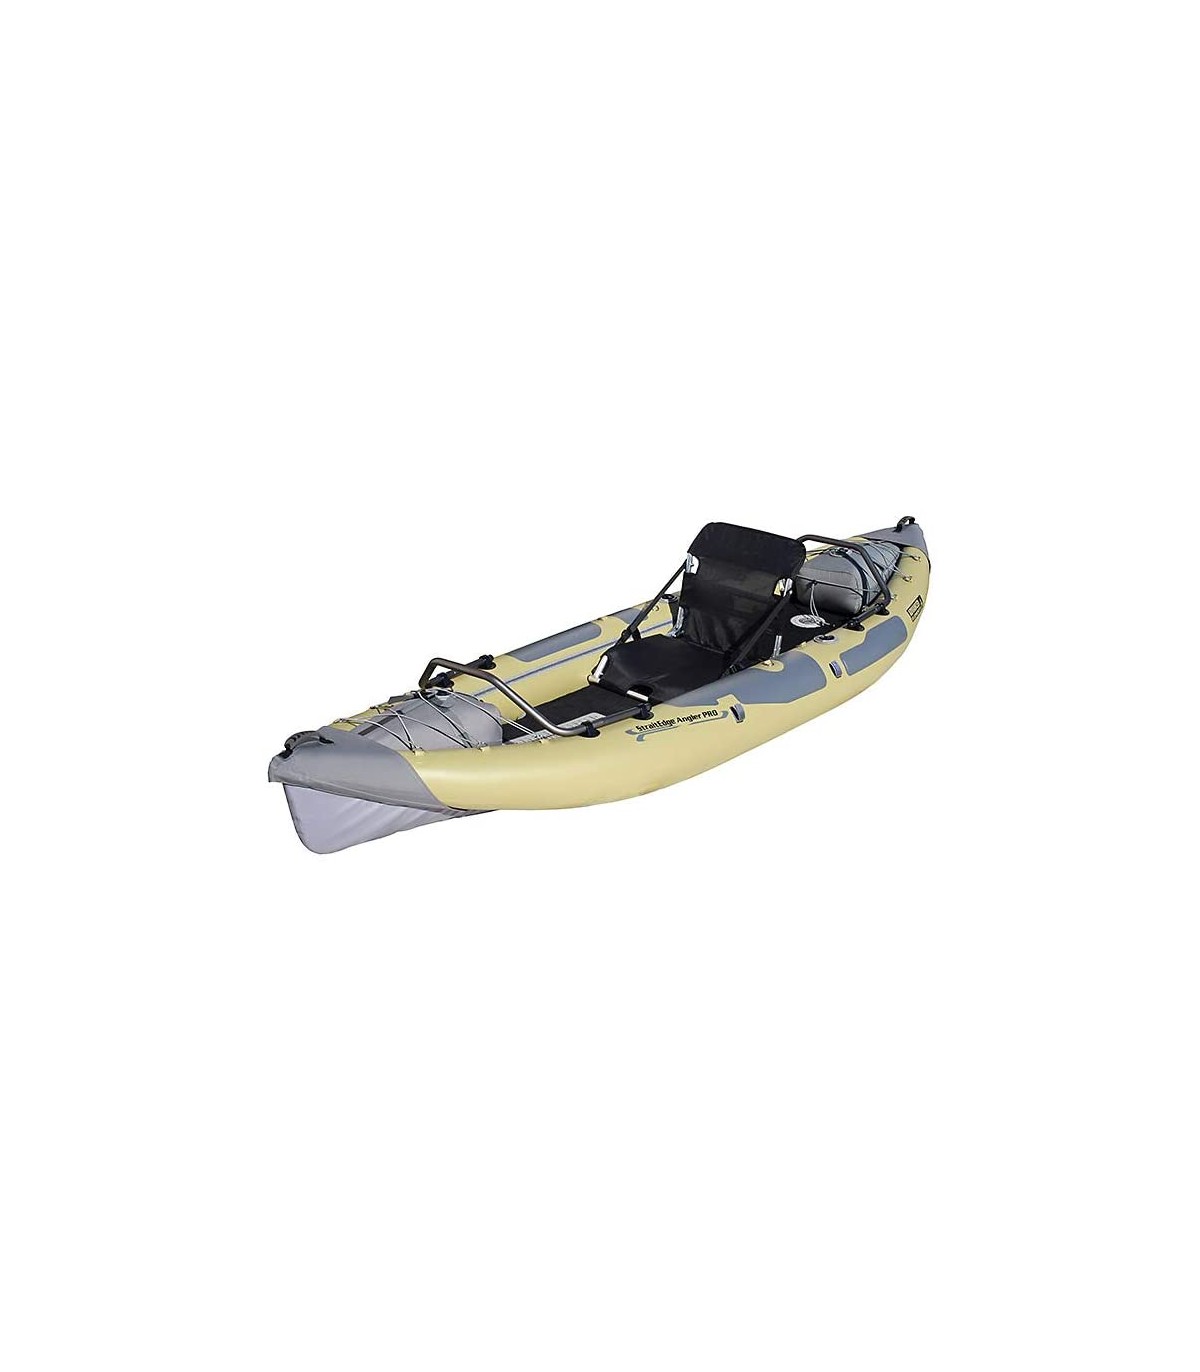 Florecer ropa interior Espantar OFERTA - Kayak hinchable de Pescar StraitEdge Angler PRO